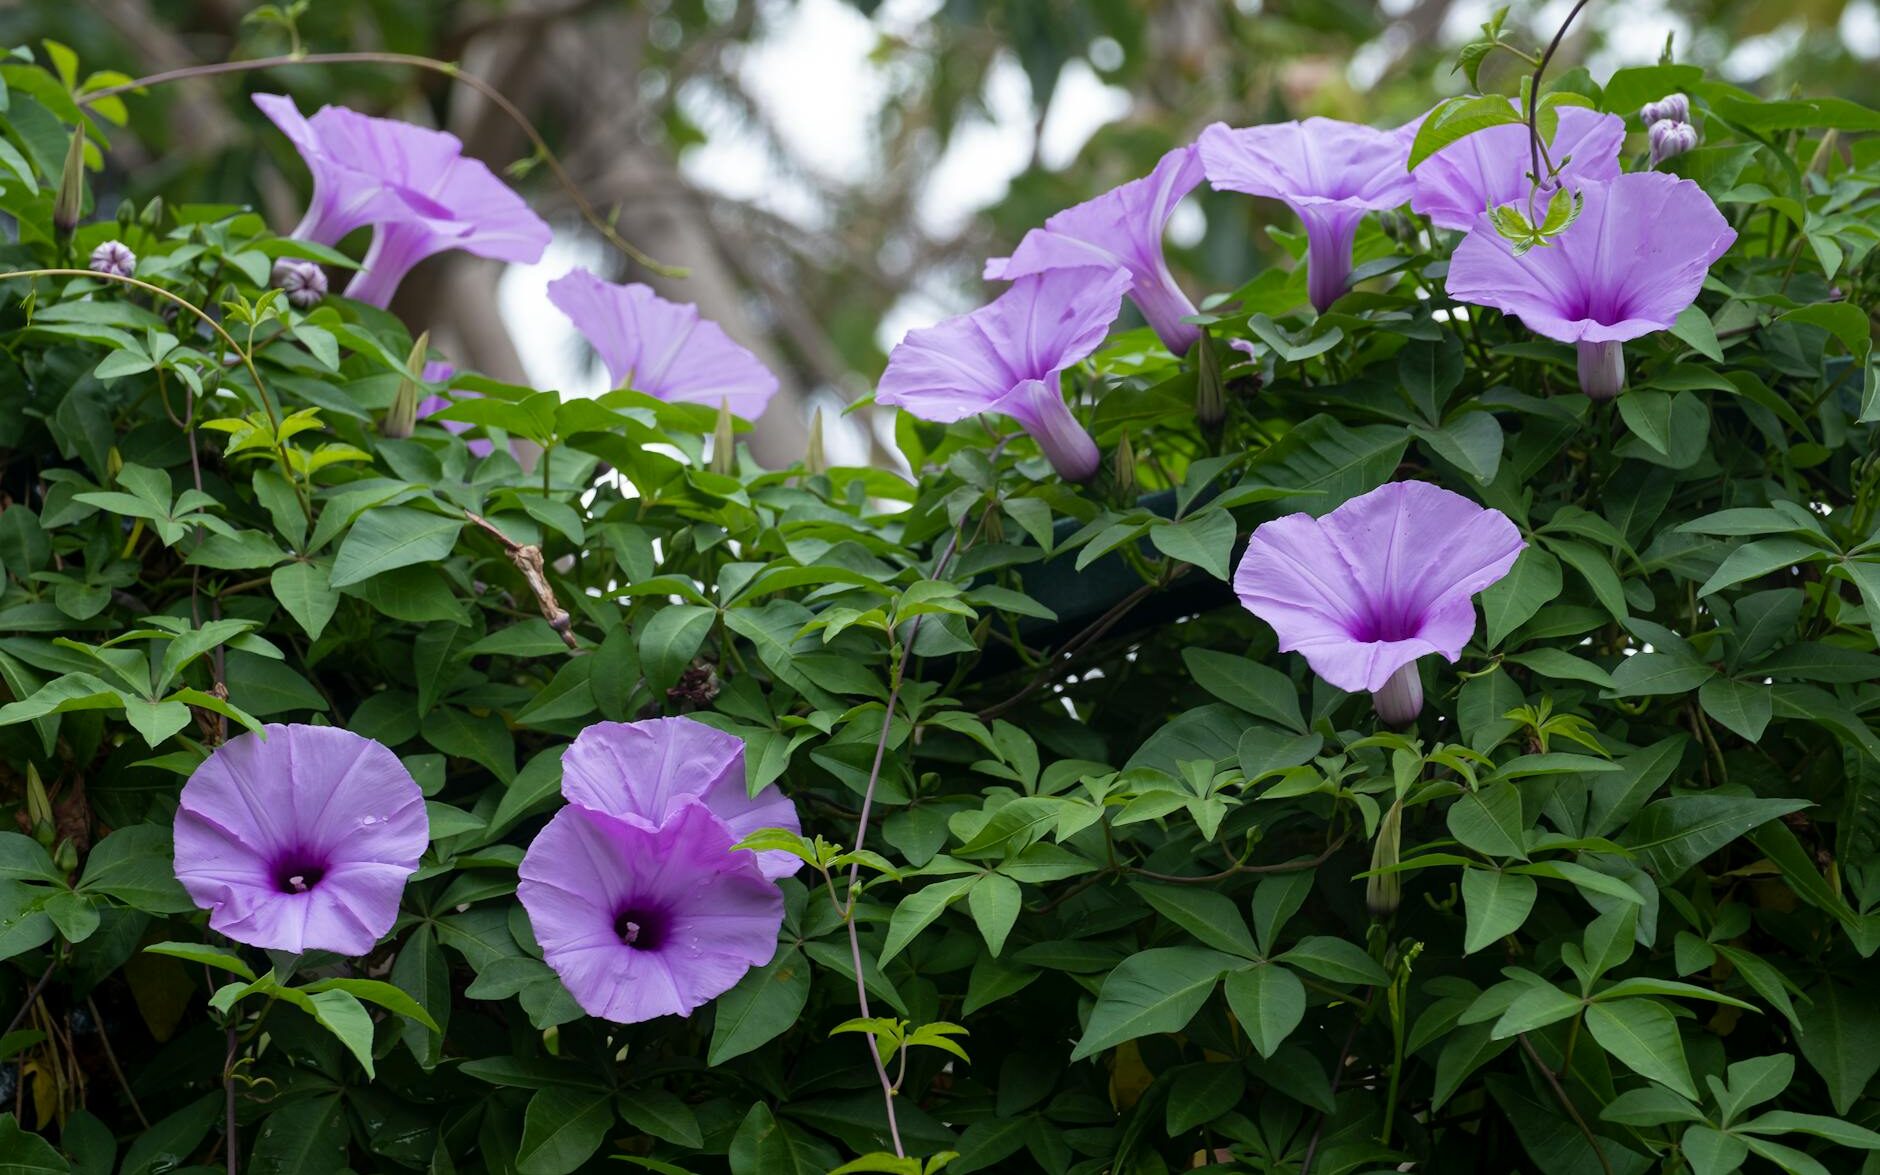 morning glory flowers in foliage in garden